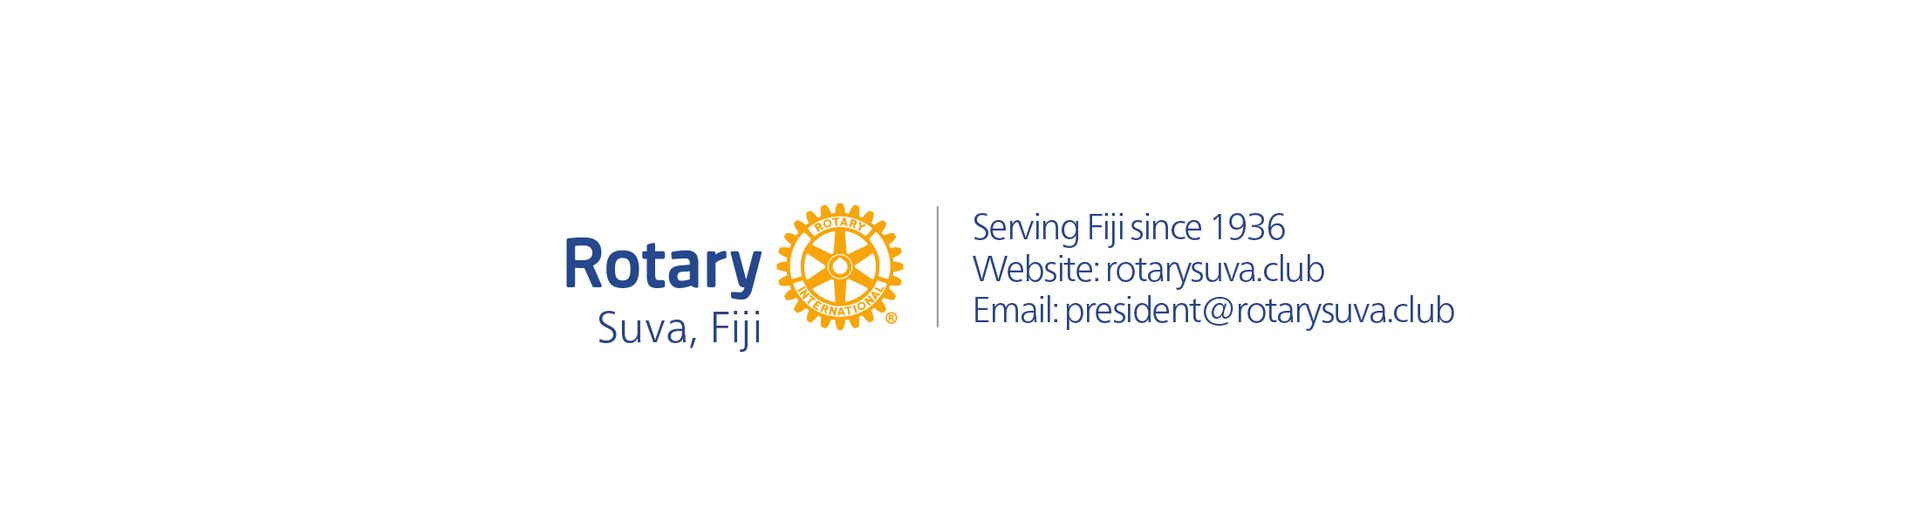 Rotary Club of Suva